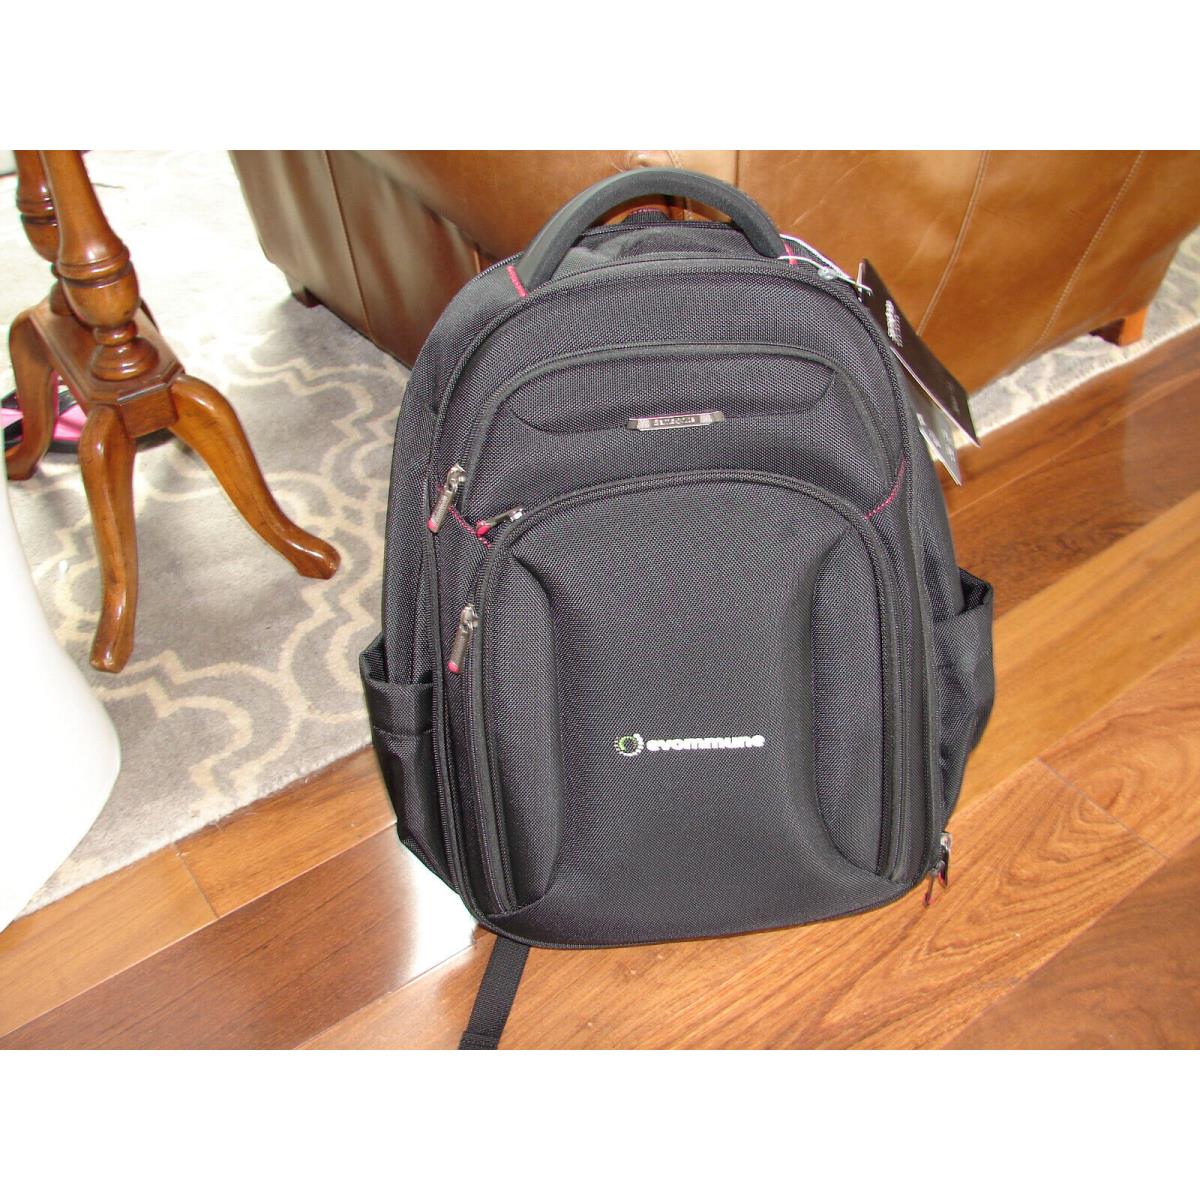 Samsonite Xenon 3.0 Checkpoint Friendly Backpack Daypack Evommune Logo Black